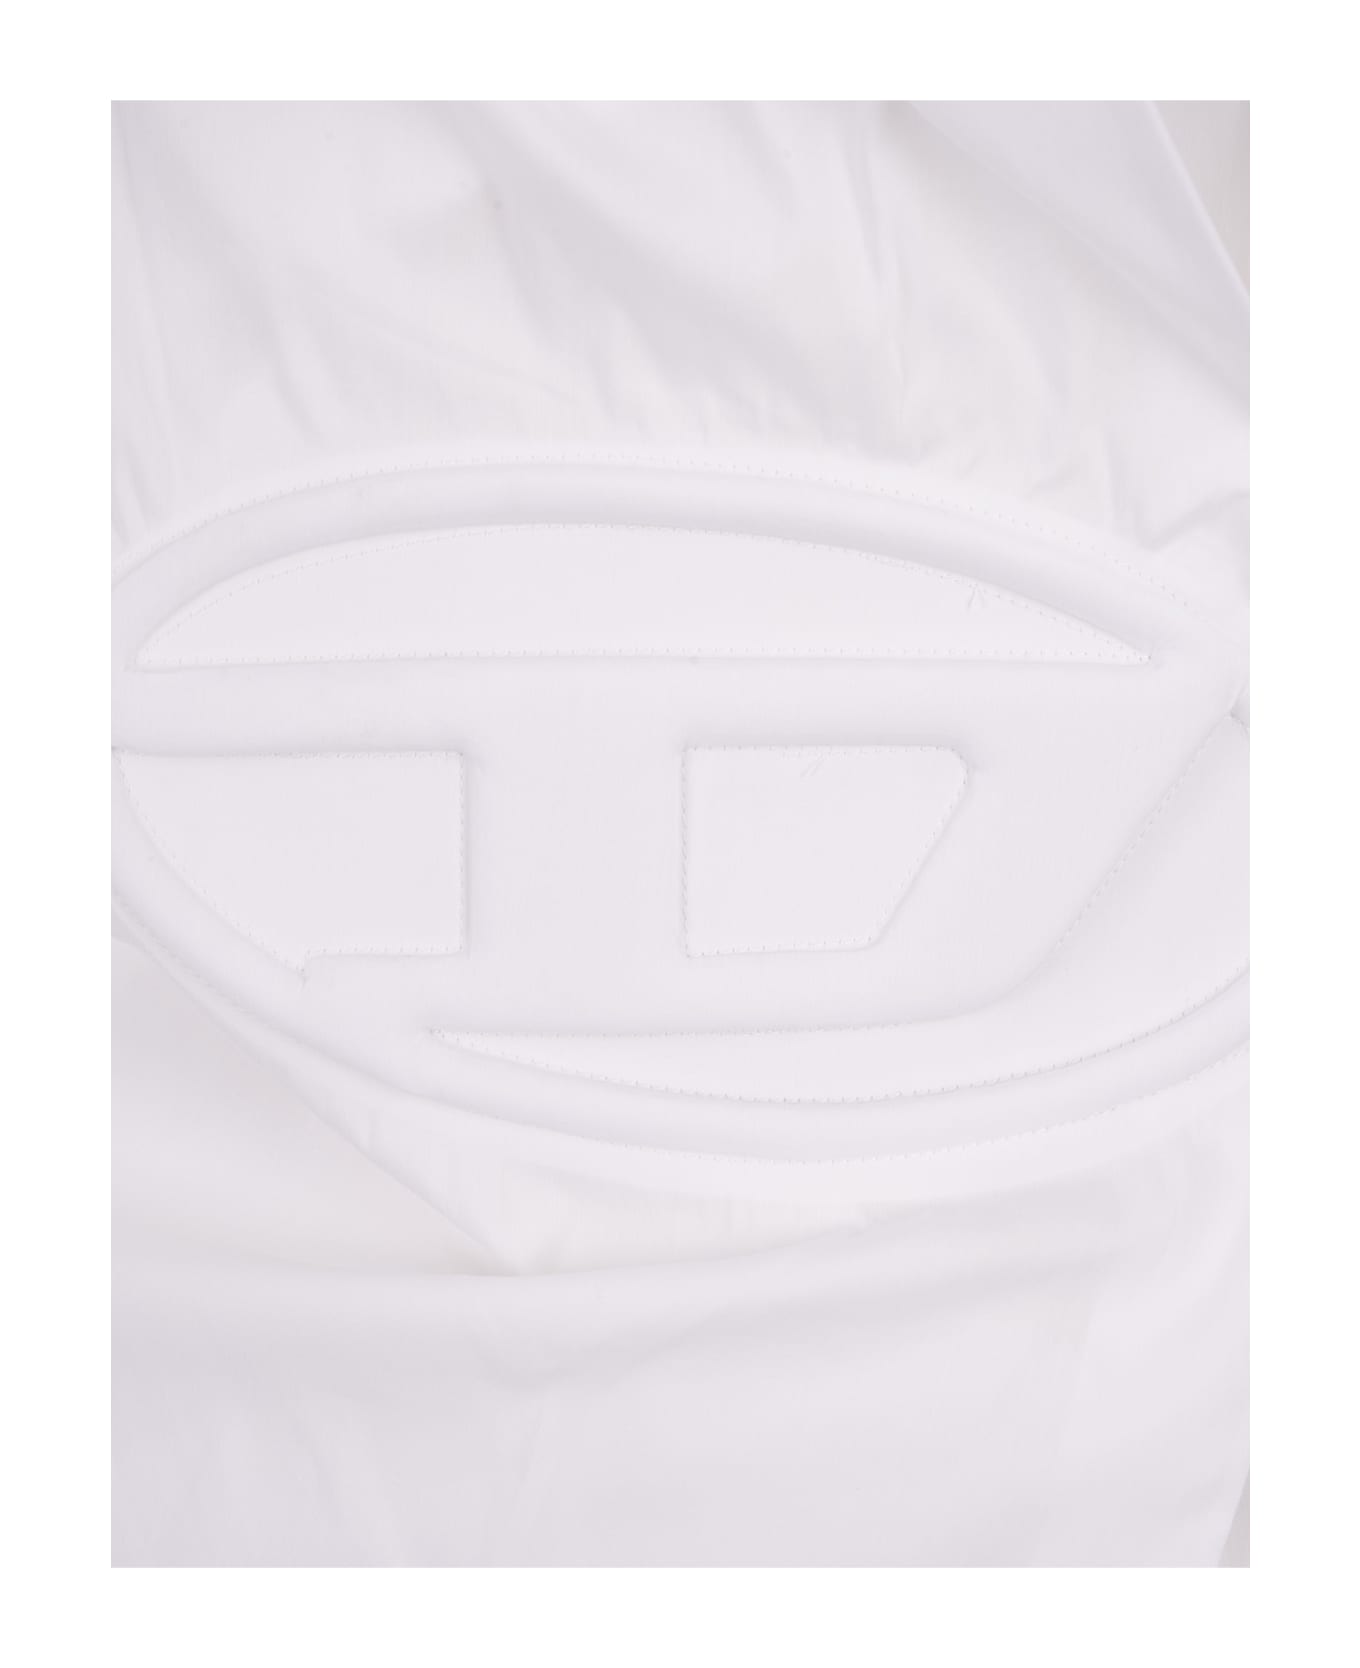 Diesel White C-siz-n1 Shirt - White